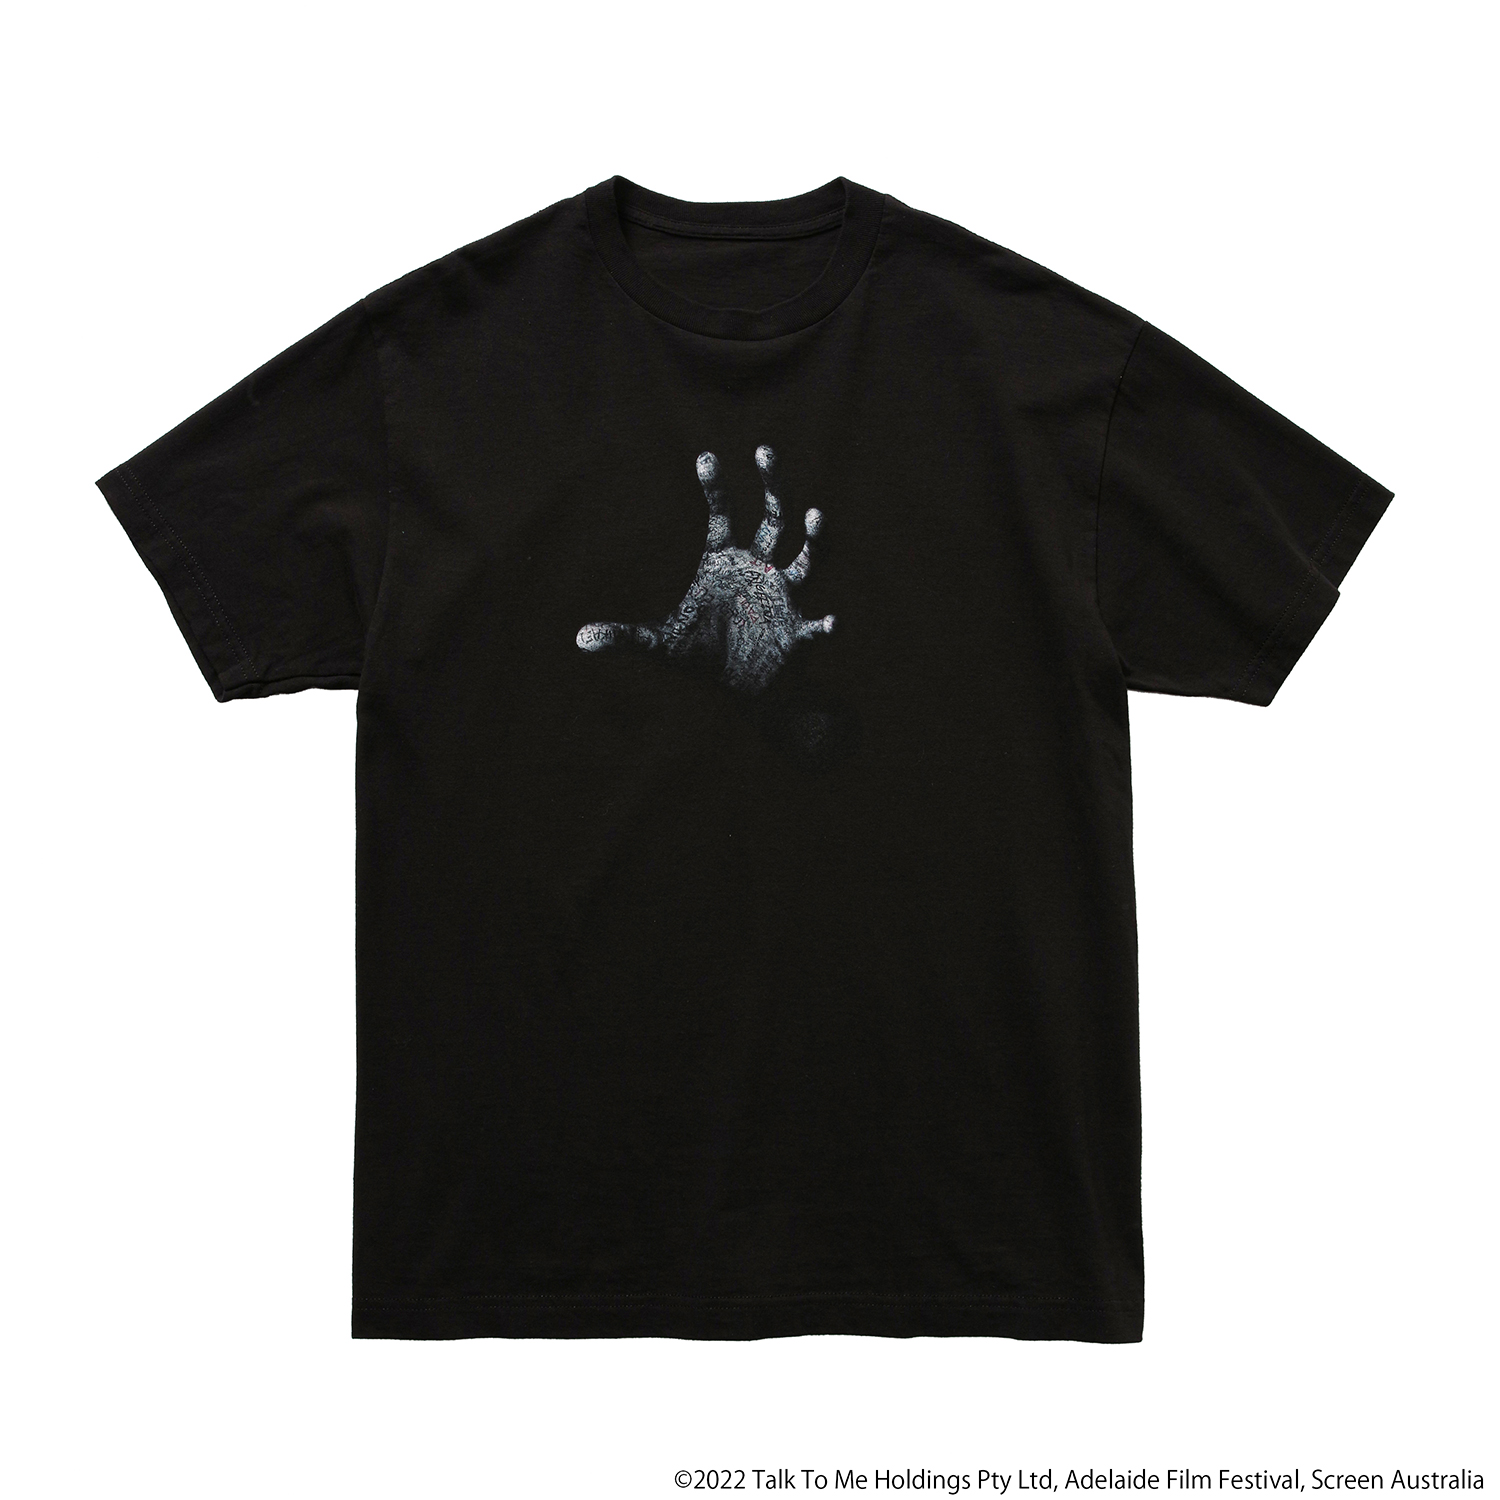 6,900円TALK TO ME weber T shirt (Mia) A24